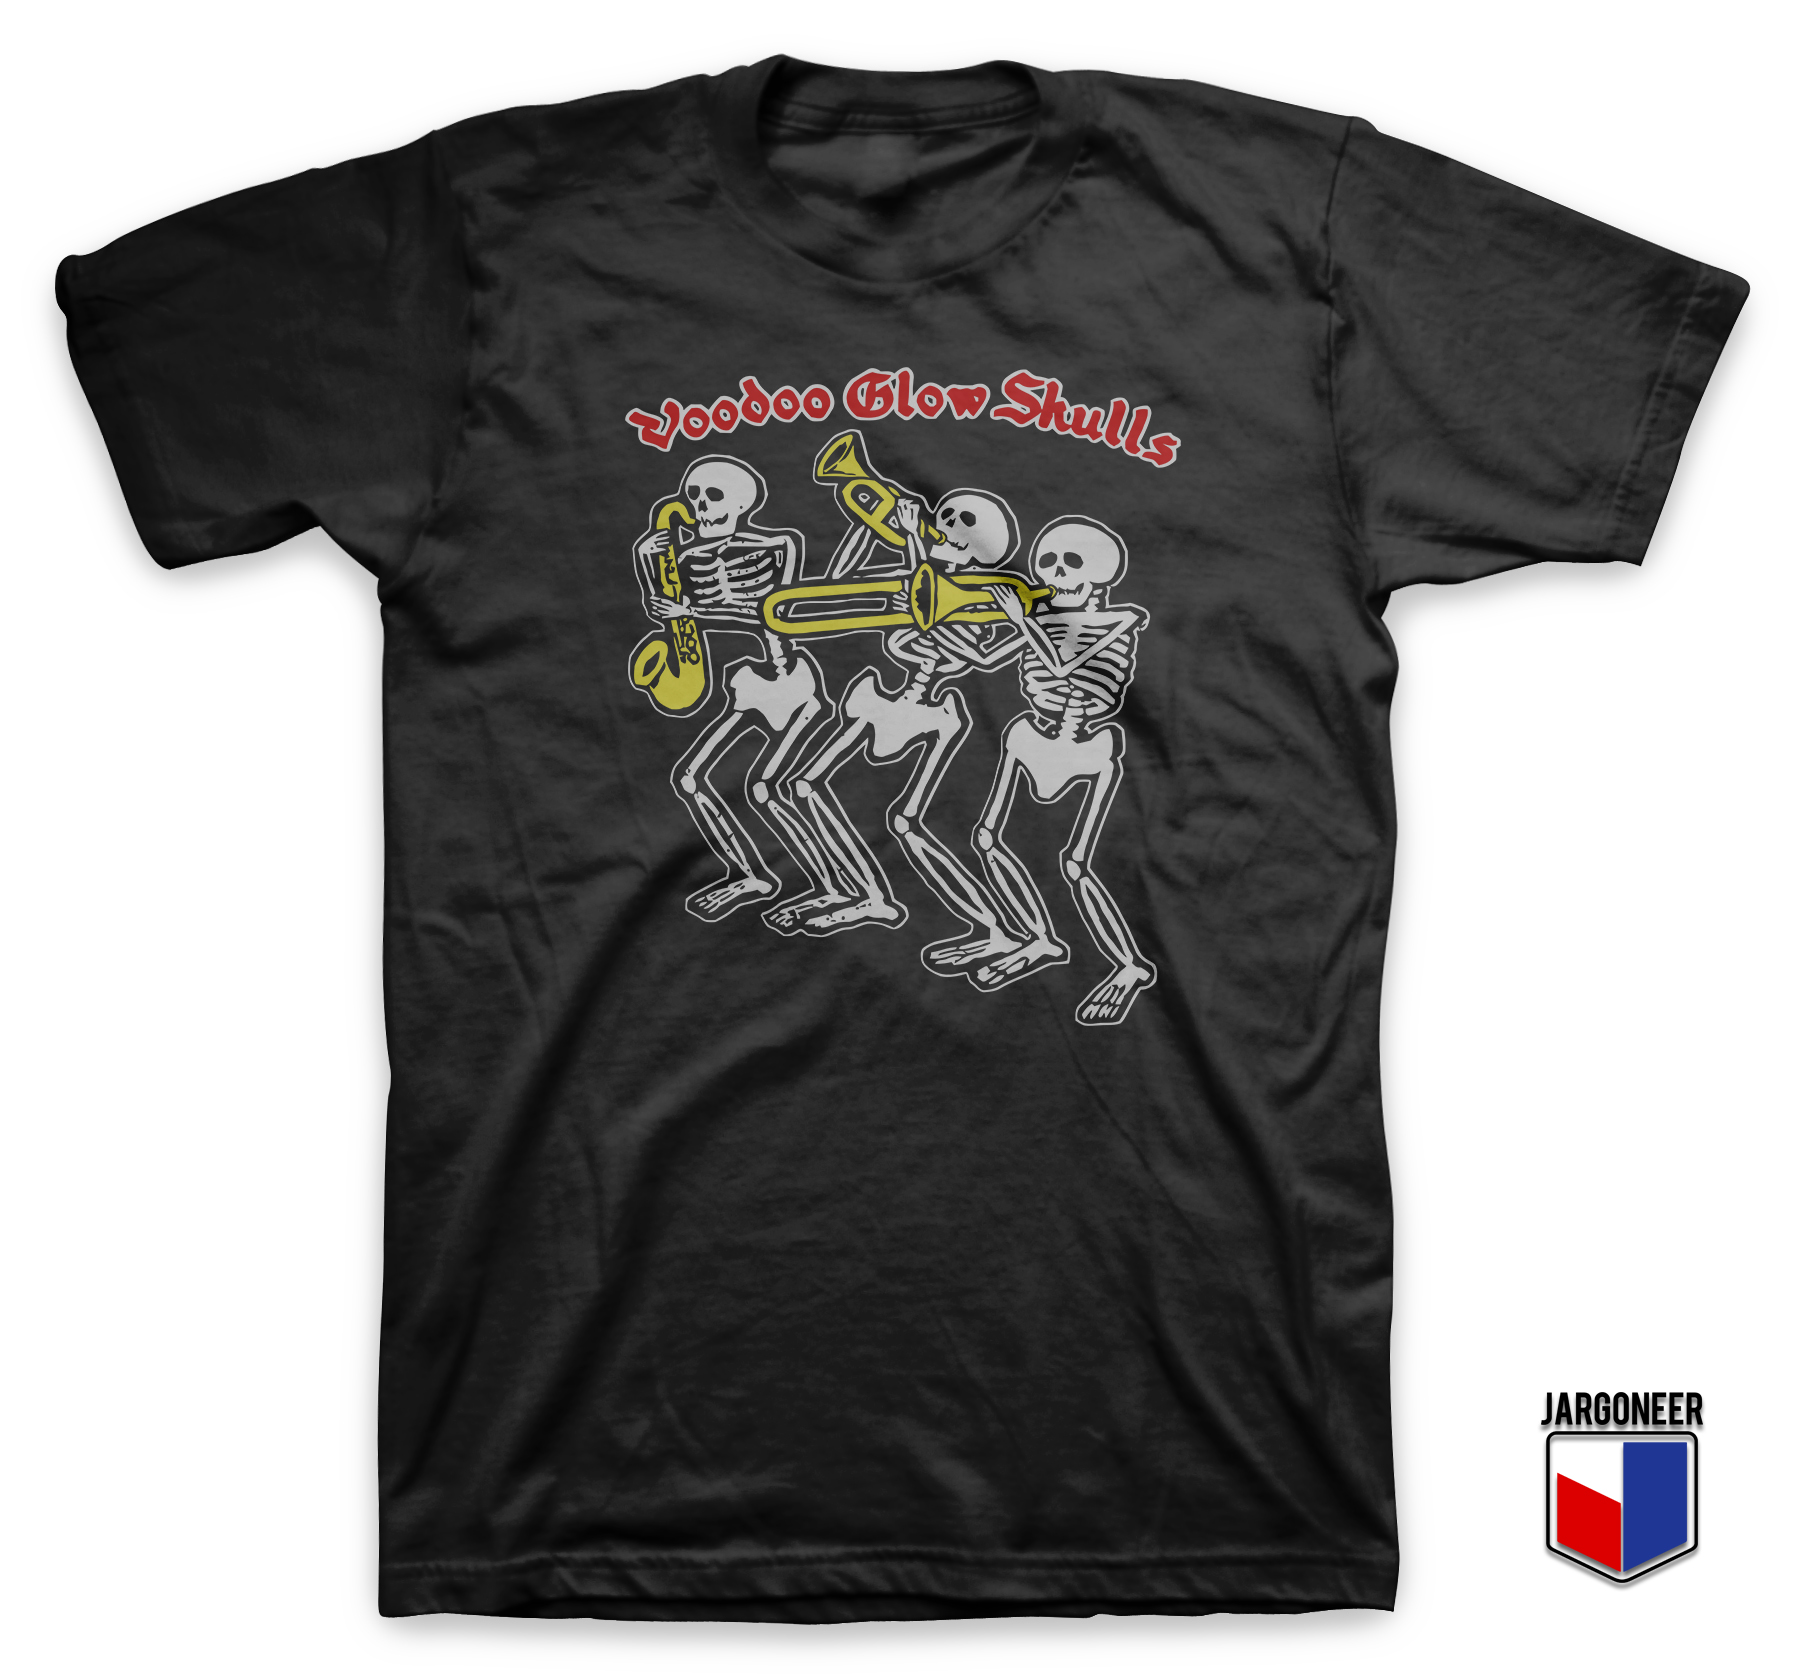 Voodoo Glow Skulls Brass Trio Black T Shirt - Shop Unique Graphic Cool Shirt Designs